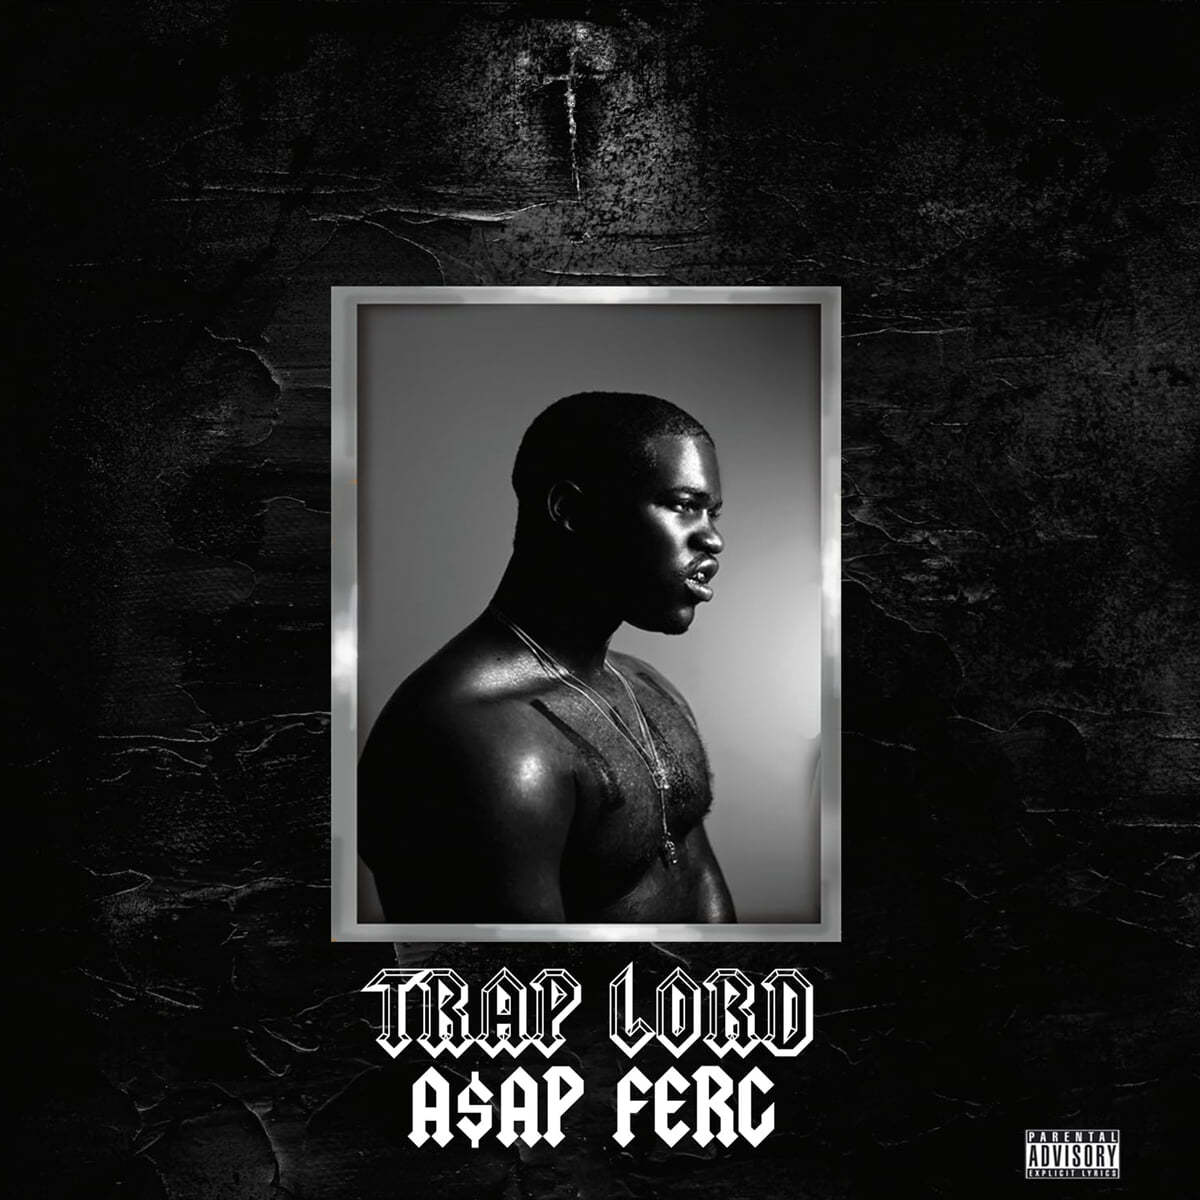 A$AP FERG - TRAP LORD [10TH ANNIVERSARY] [수입] [LP/VINYL] 